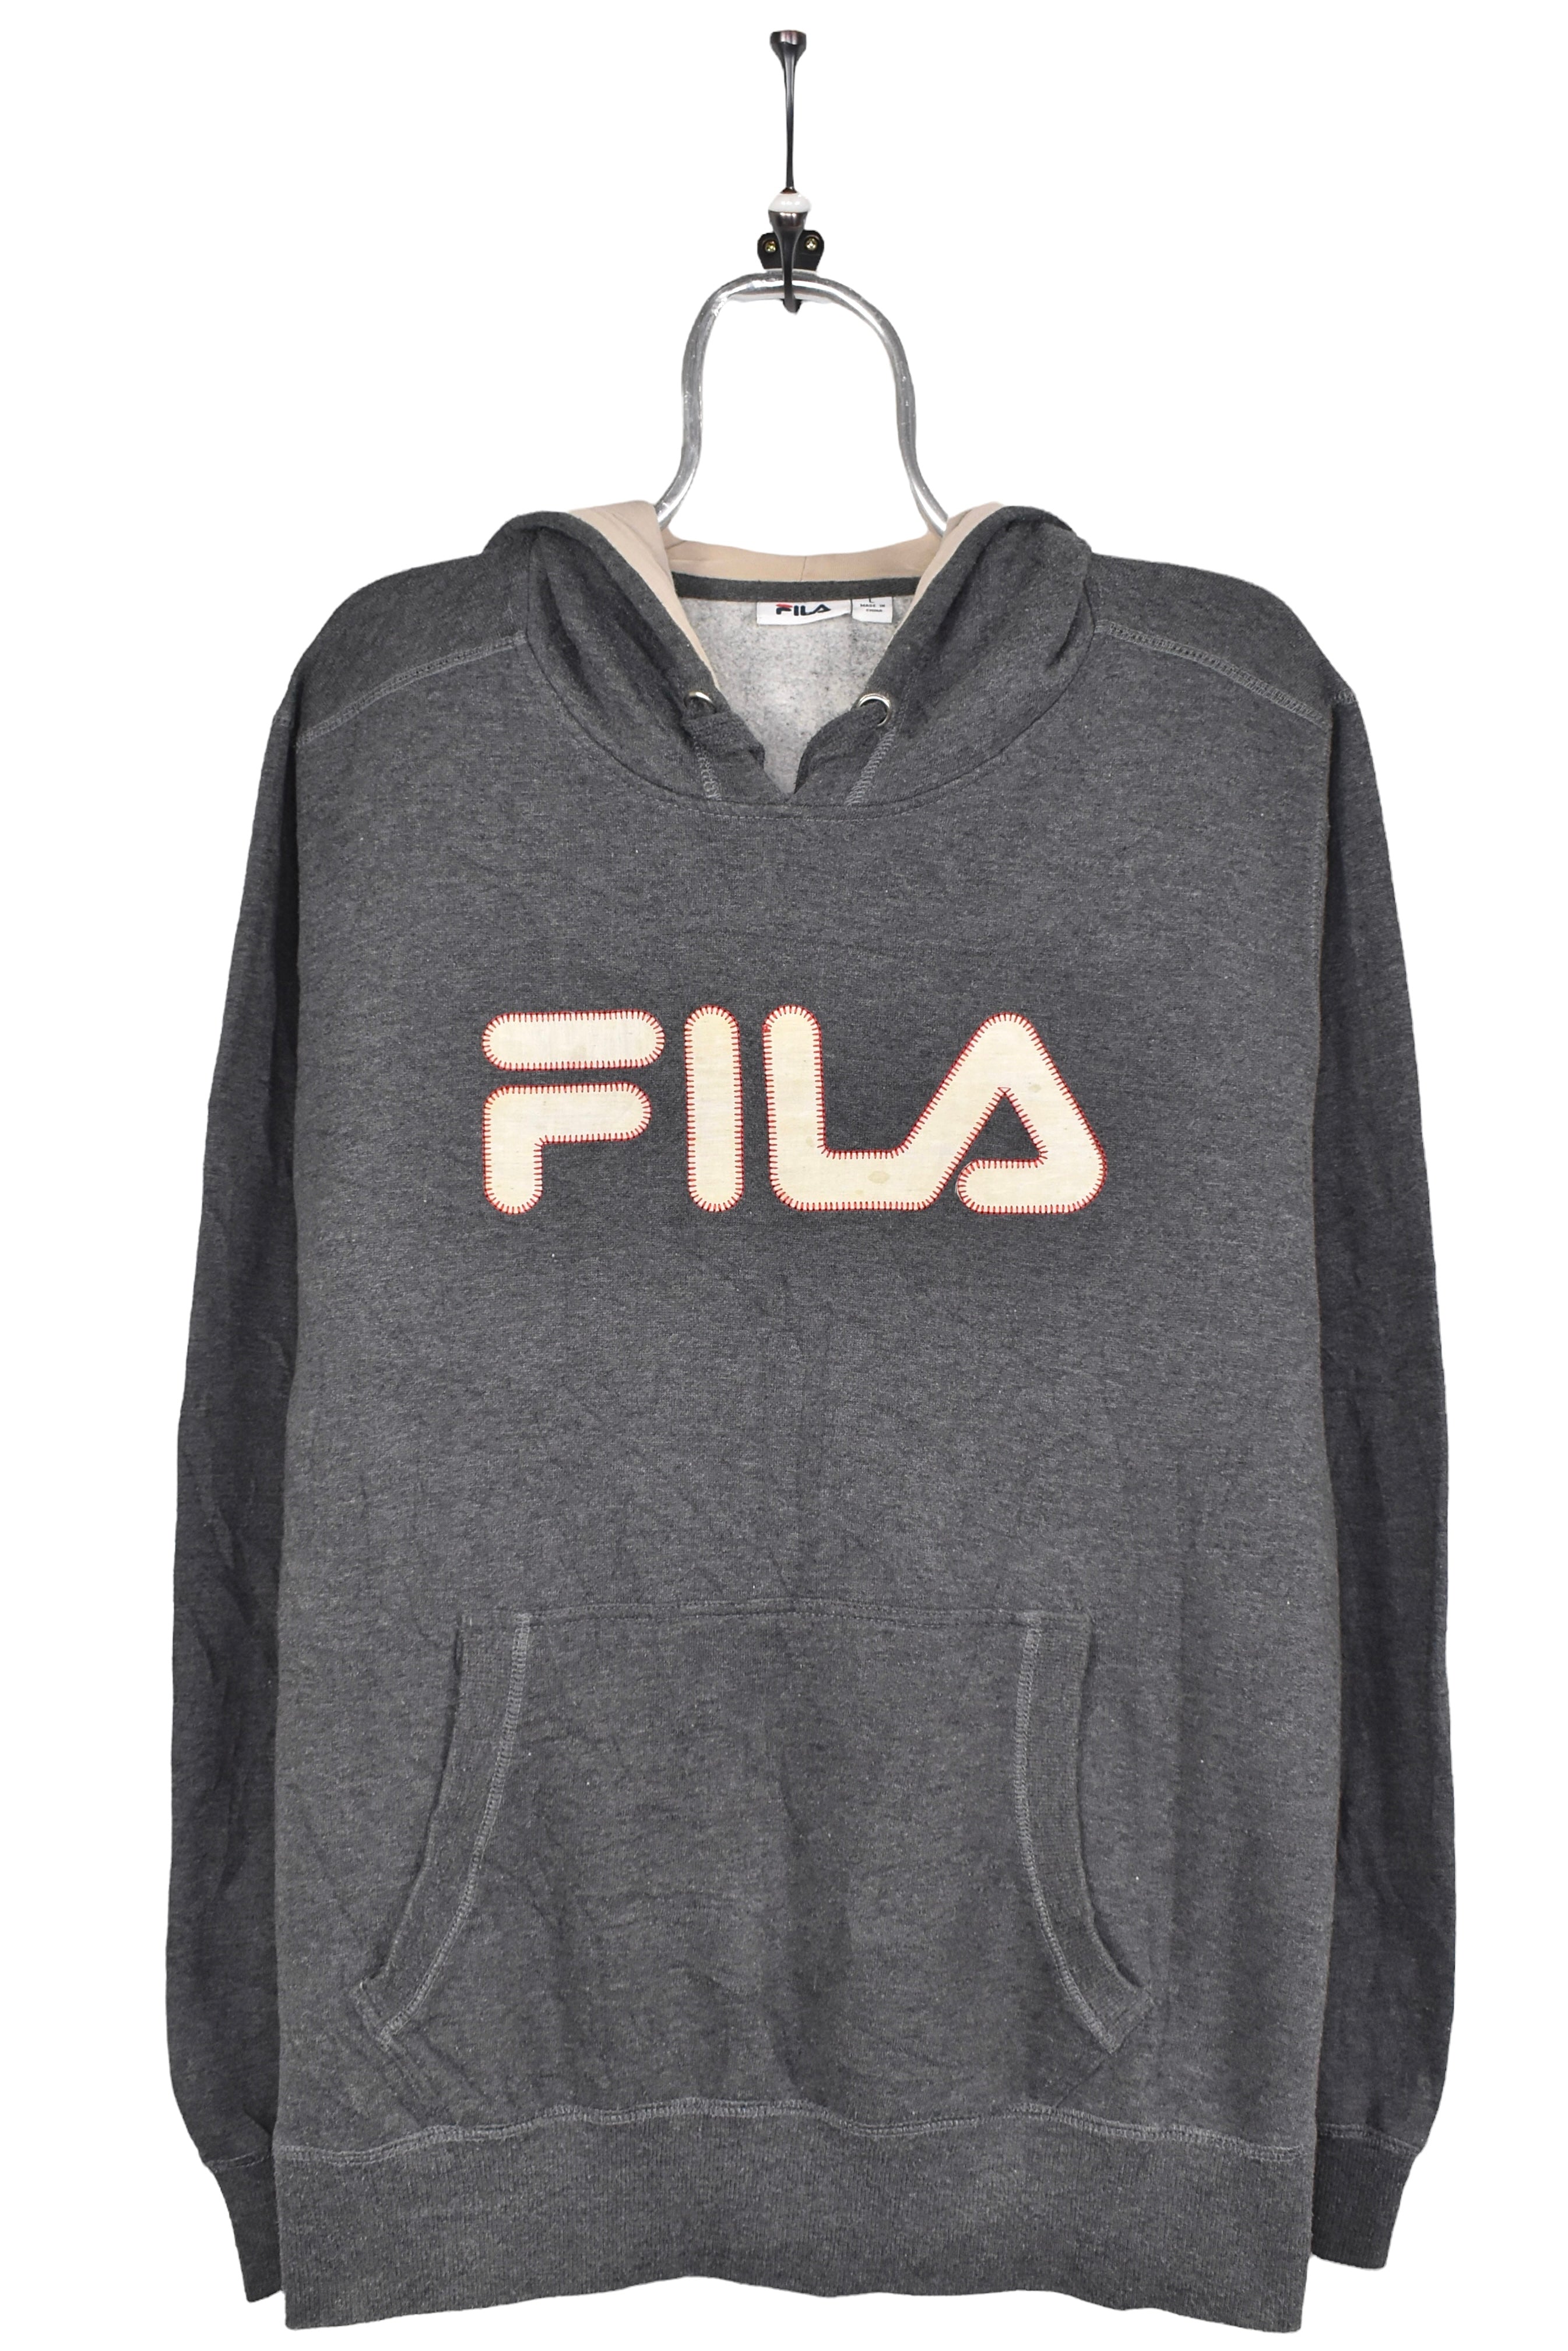 Vintage Fila hoodie, grey graphic sweatshirt - AU Large FILA